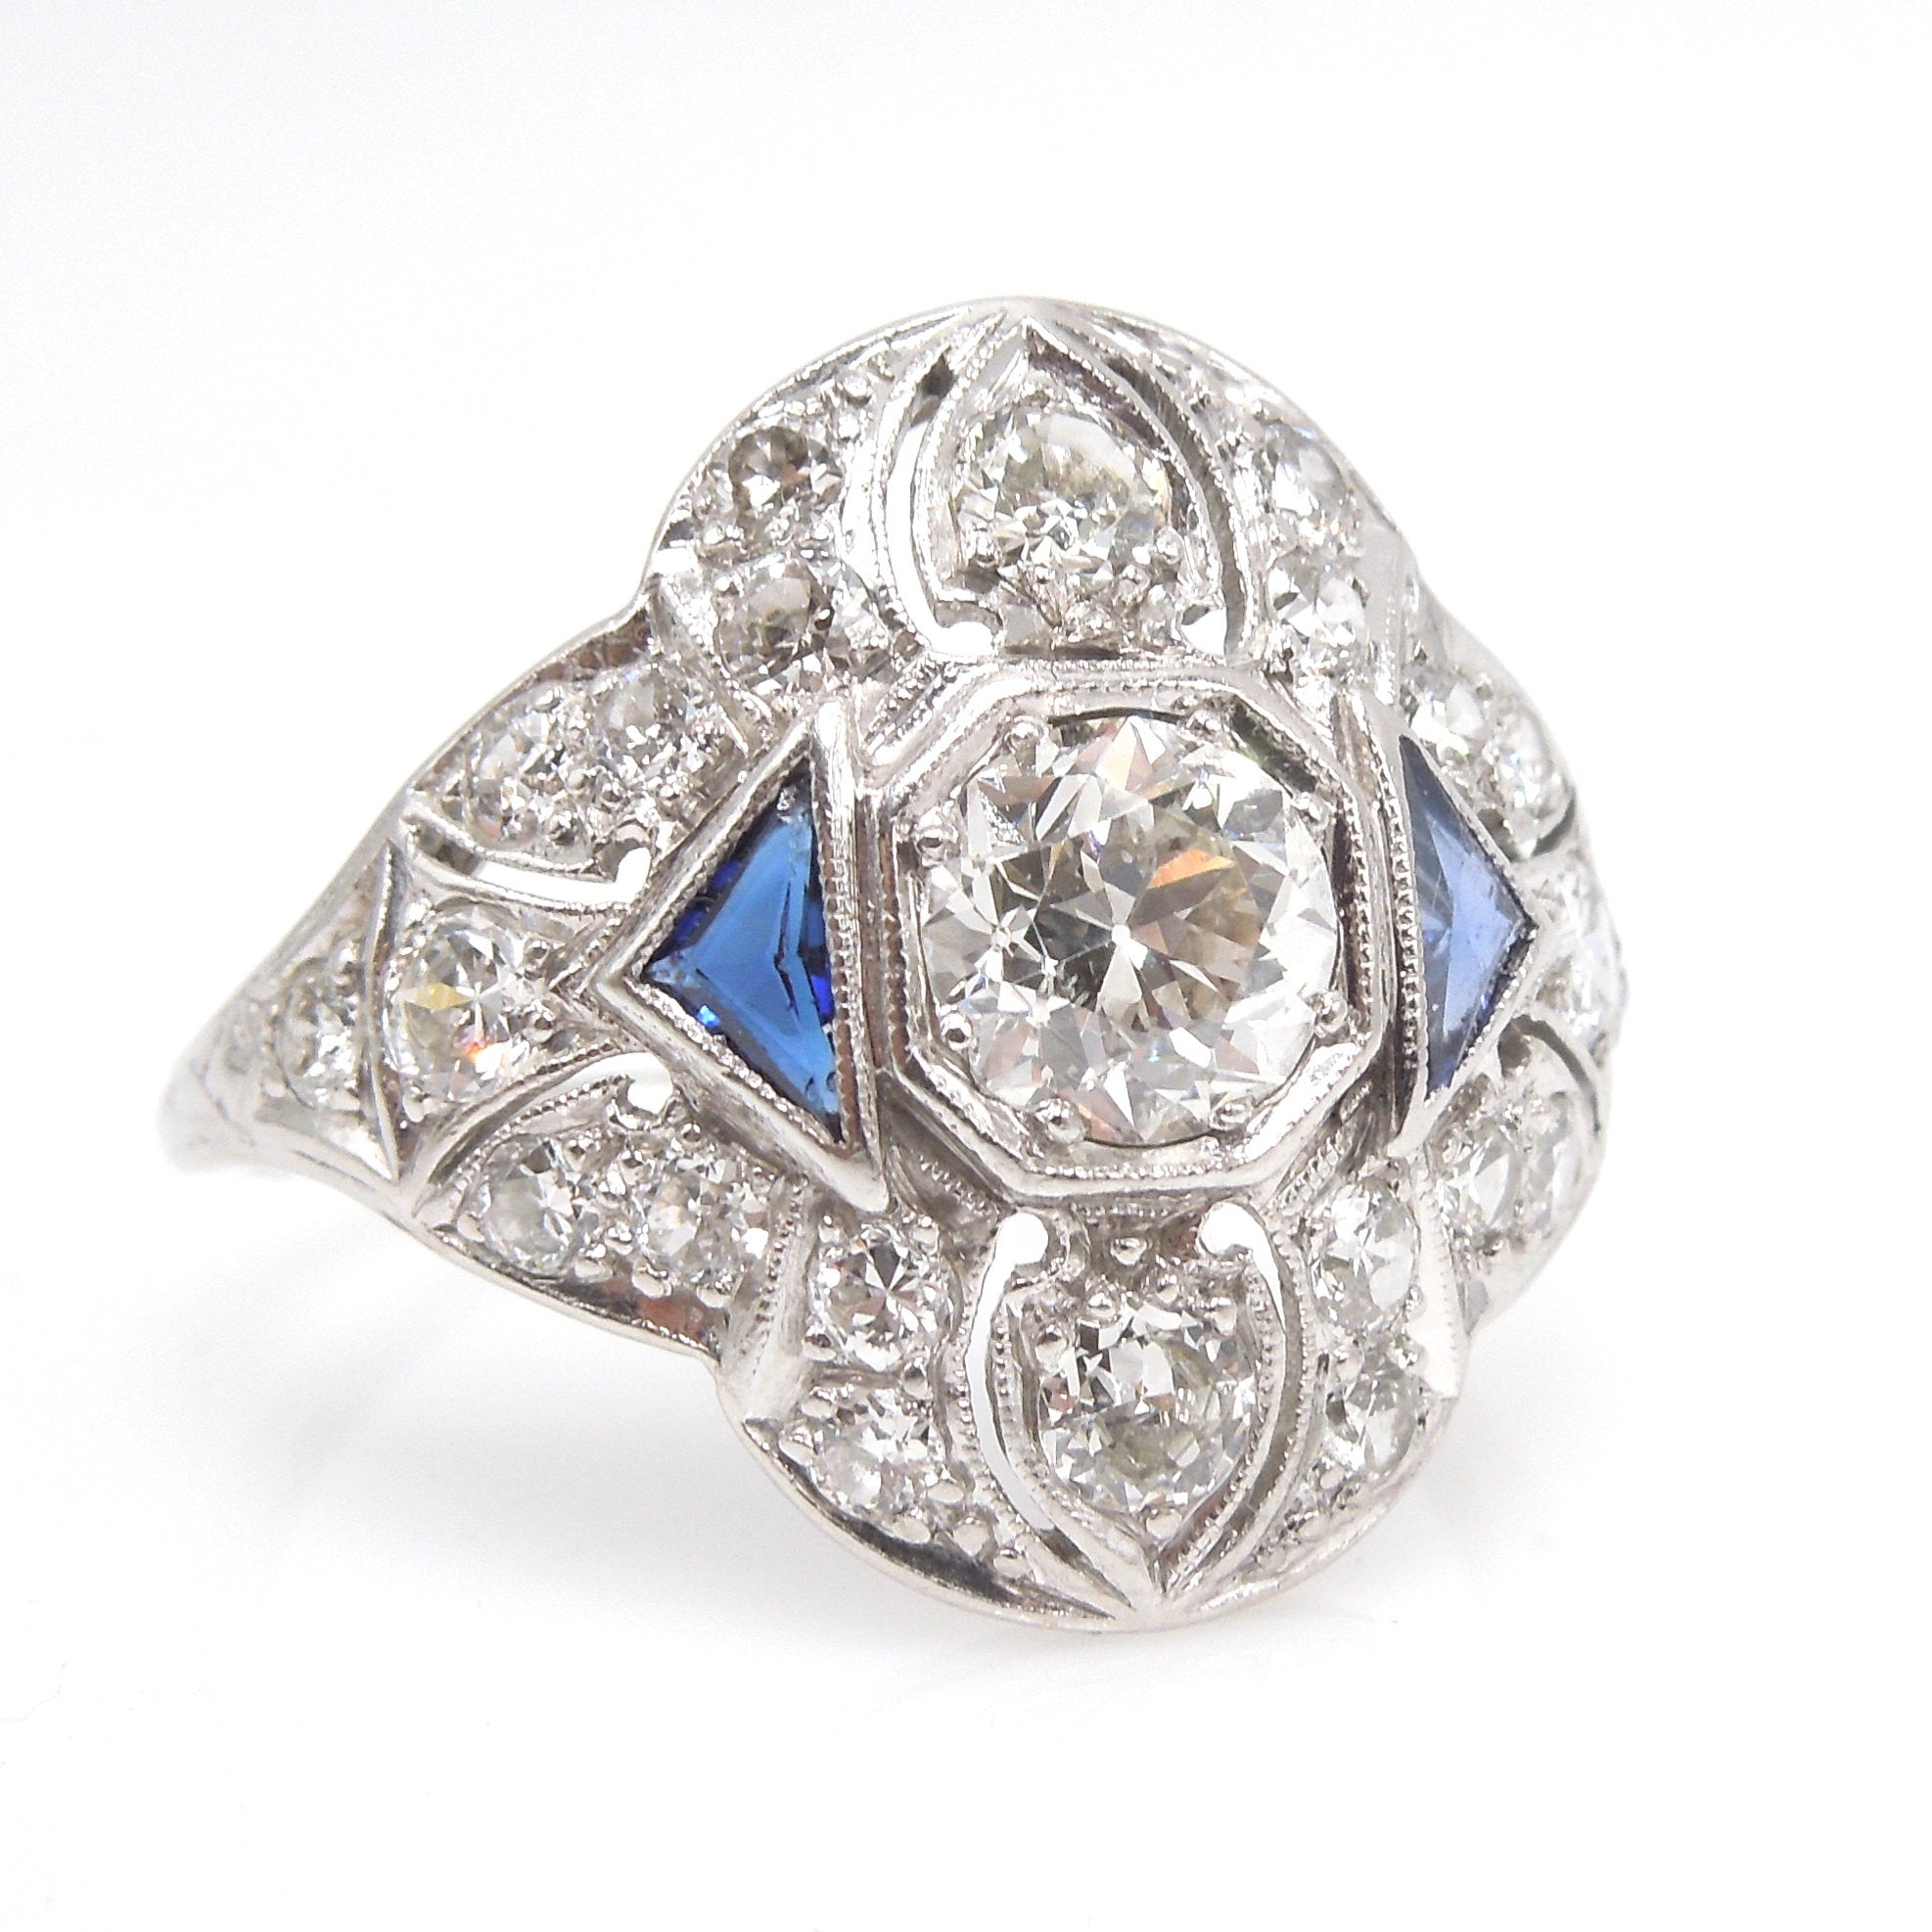 Wide Art Deco European Cut Diamond and Triangle Sapphire Ring in Platinum